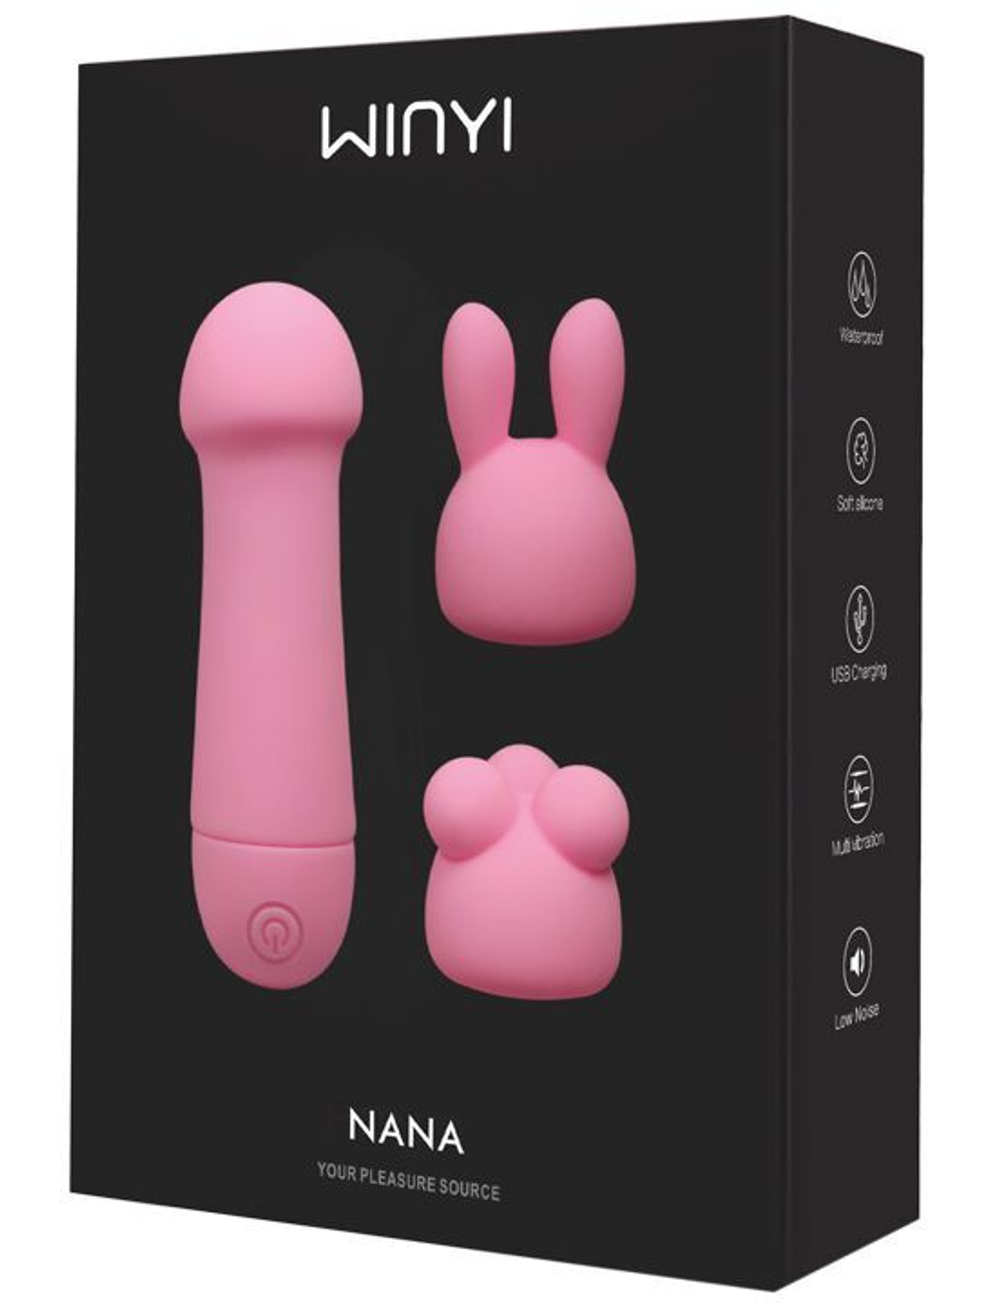 Нежно-розовый мини-вибратор Nana с 3 насадками - 10,6 см.